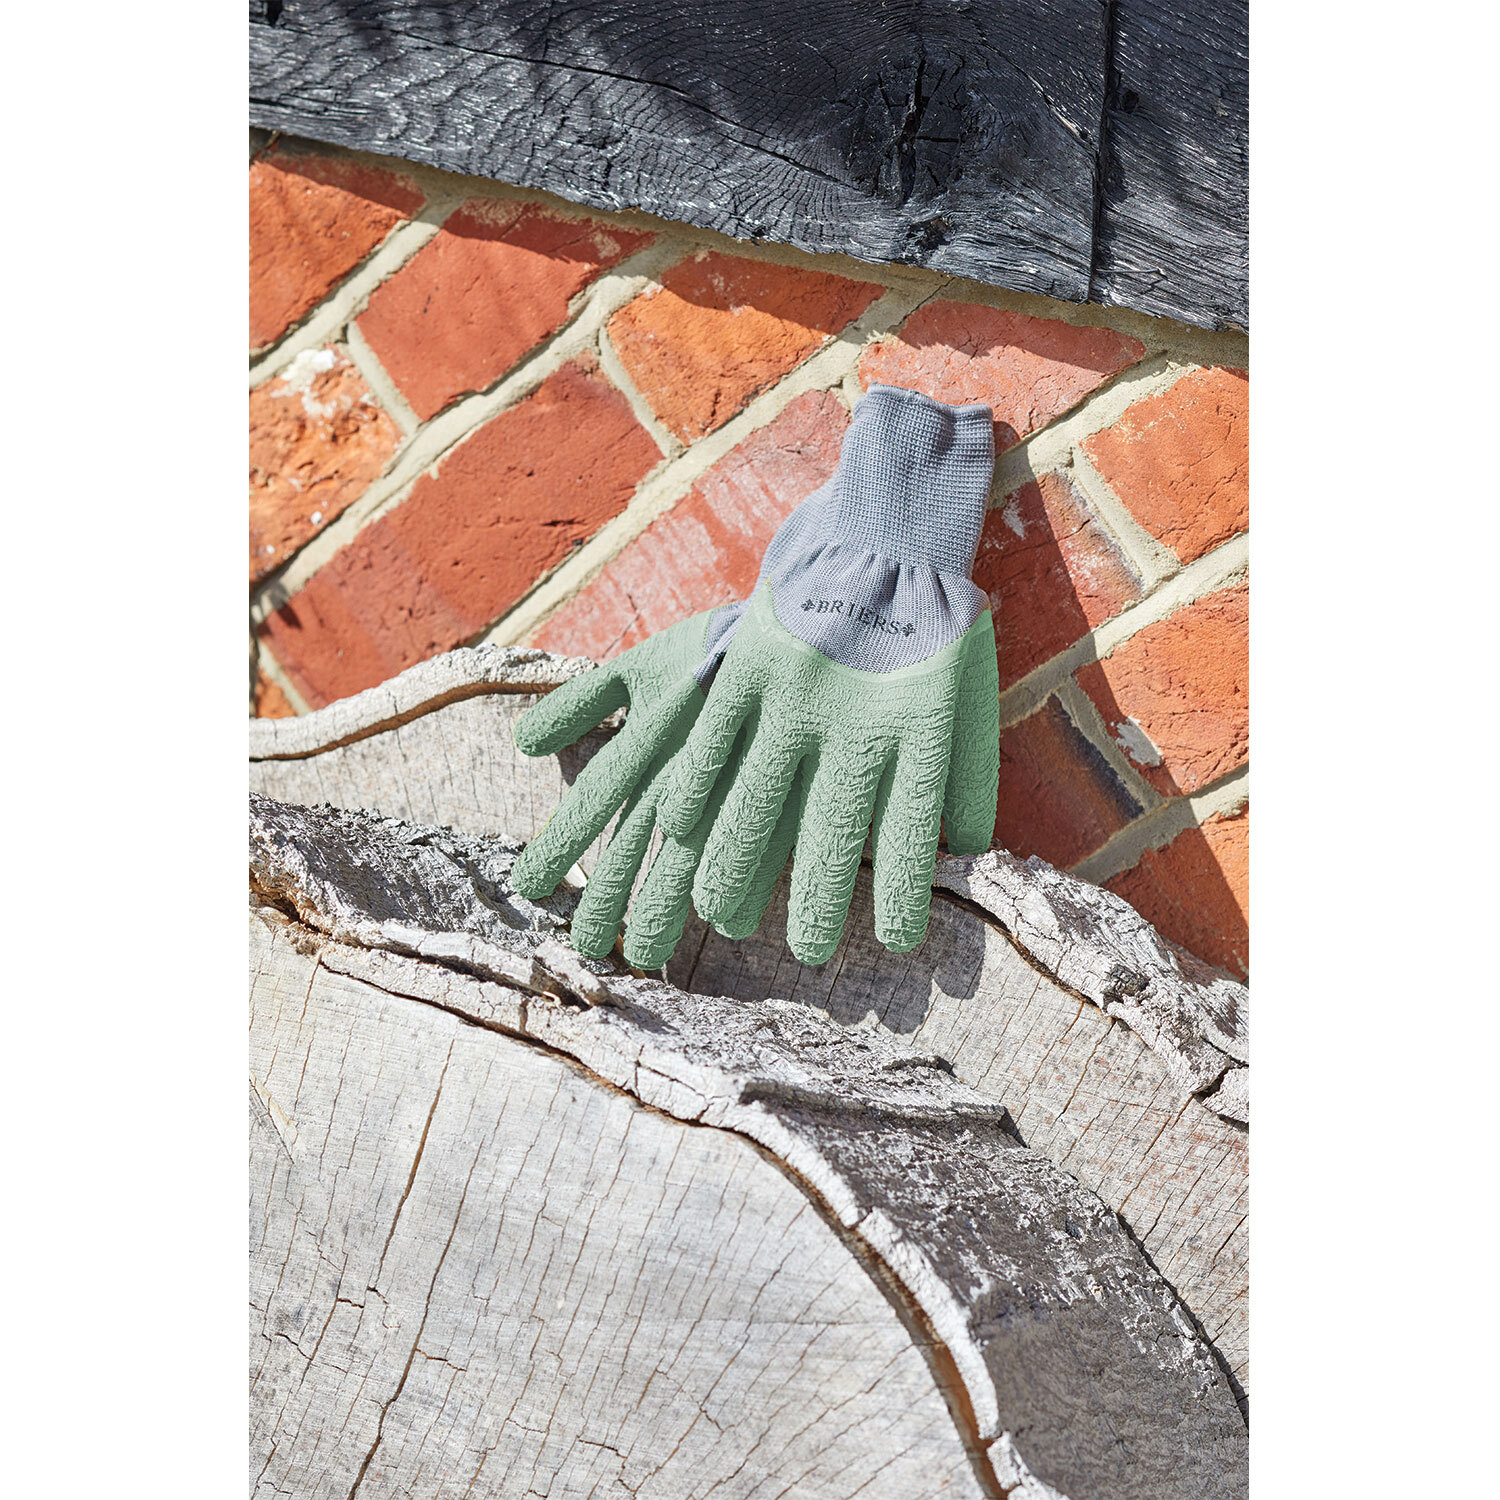 Multi-Task Gardening Gloves - Green Image 2